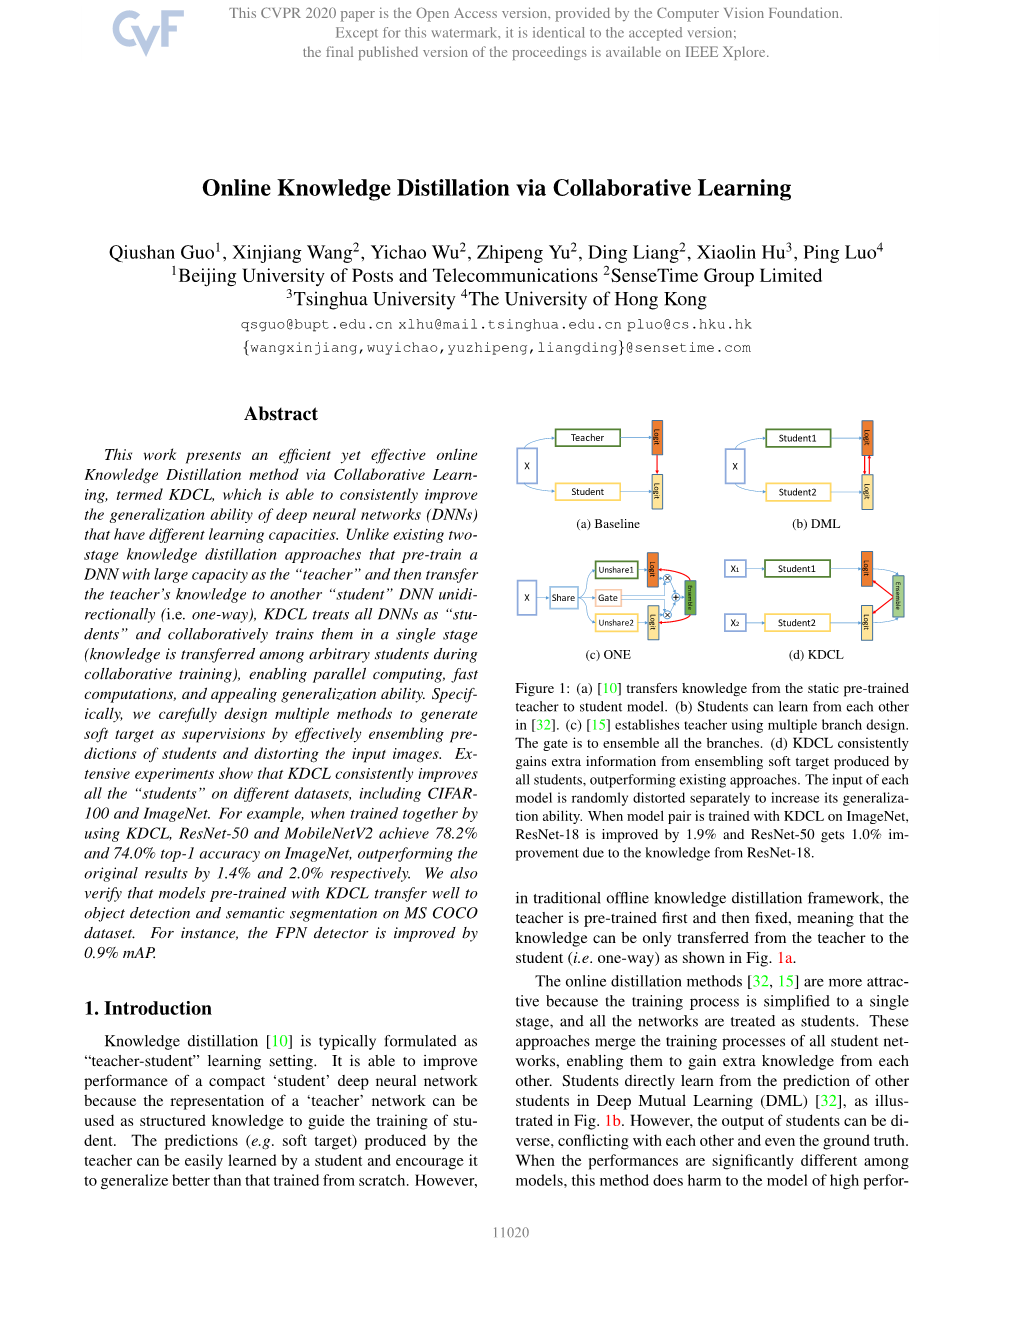 Online Knowledge Distillation Via Collaborative Learning